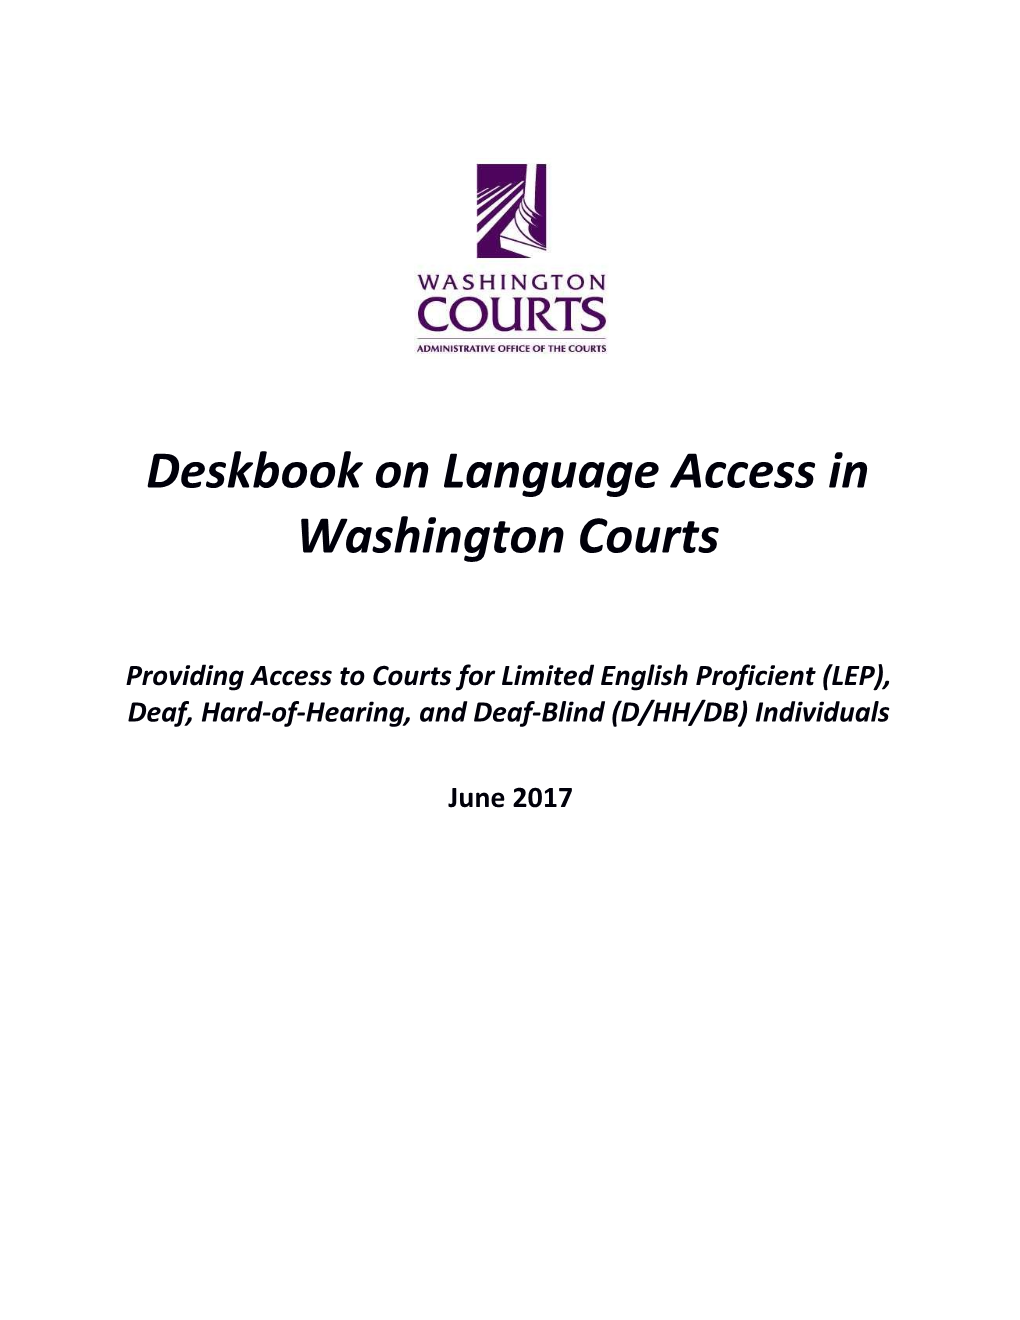 Deskbook on Language Access in Washington Courts